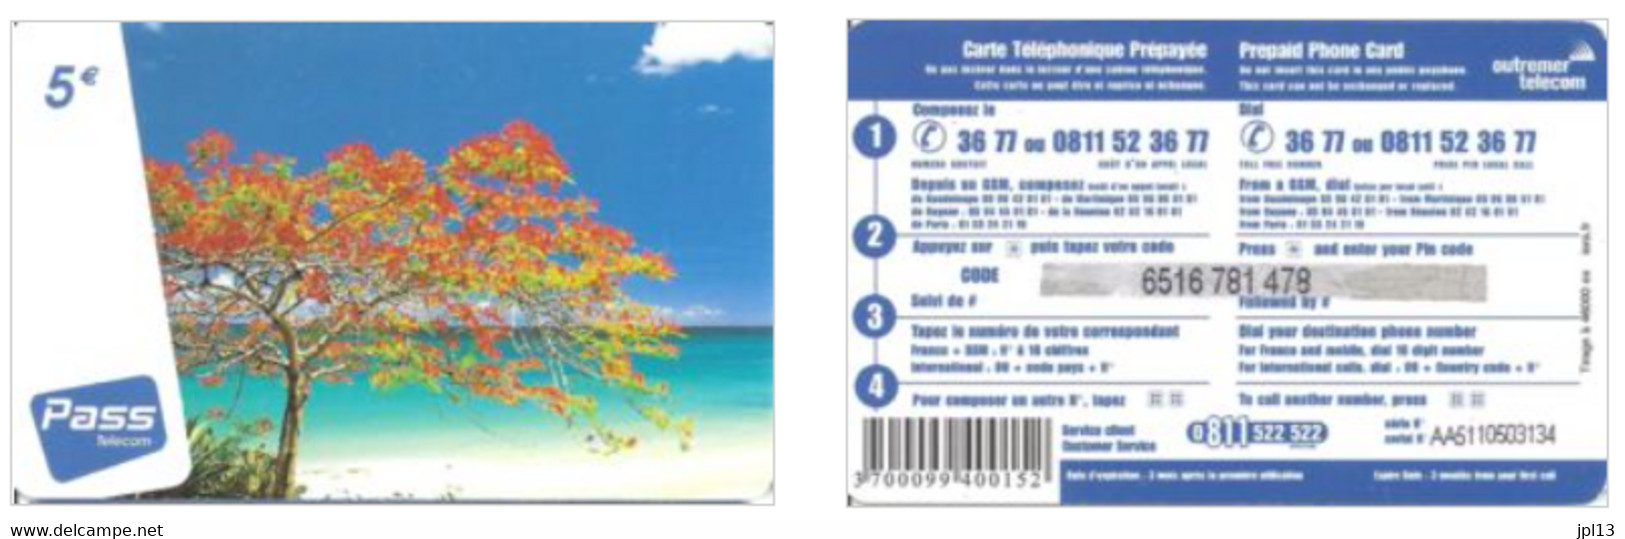 Carte Prépayée Outremer Telecom 5€ Flamboyant (Pass Telecom), Tirage 46.000 Ex., Série AA5110xxxxxx - Antillas (Francesas)